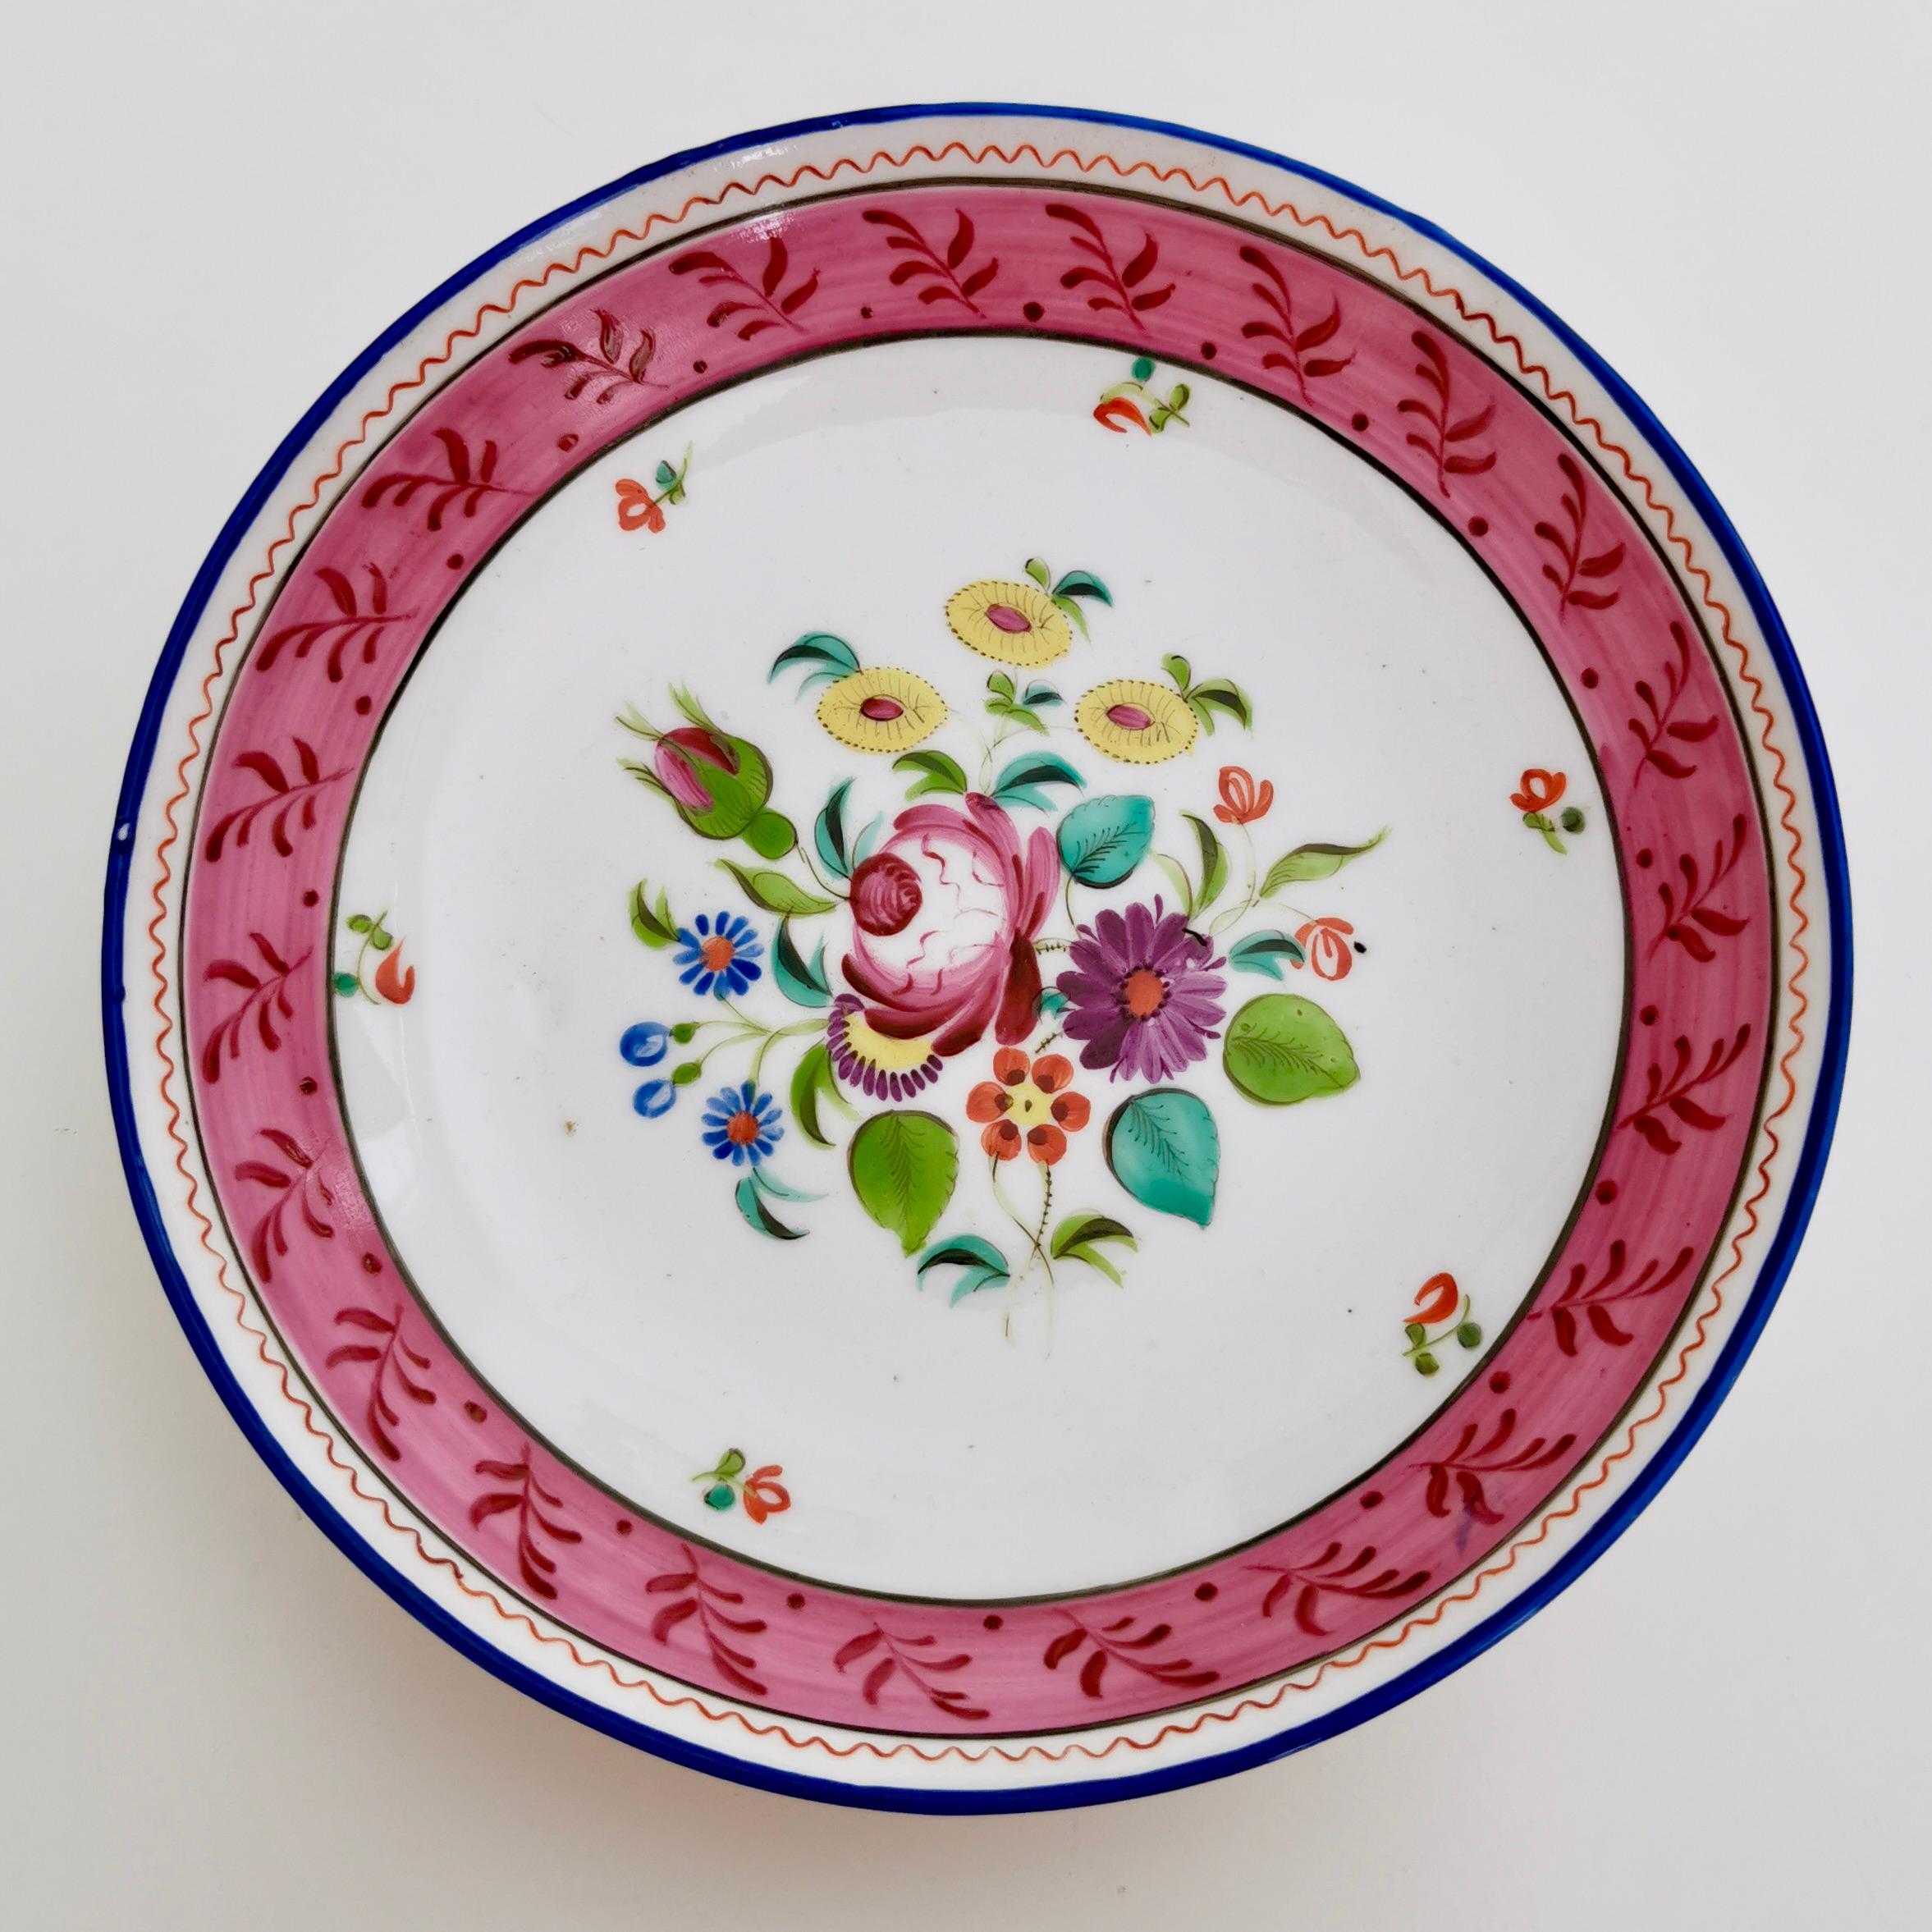 Hand-Painted New Hall Porcelain Teacup, Hybrid Paste, Flowers Patt, 1180, circa 1815